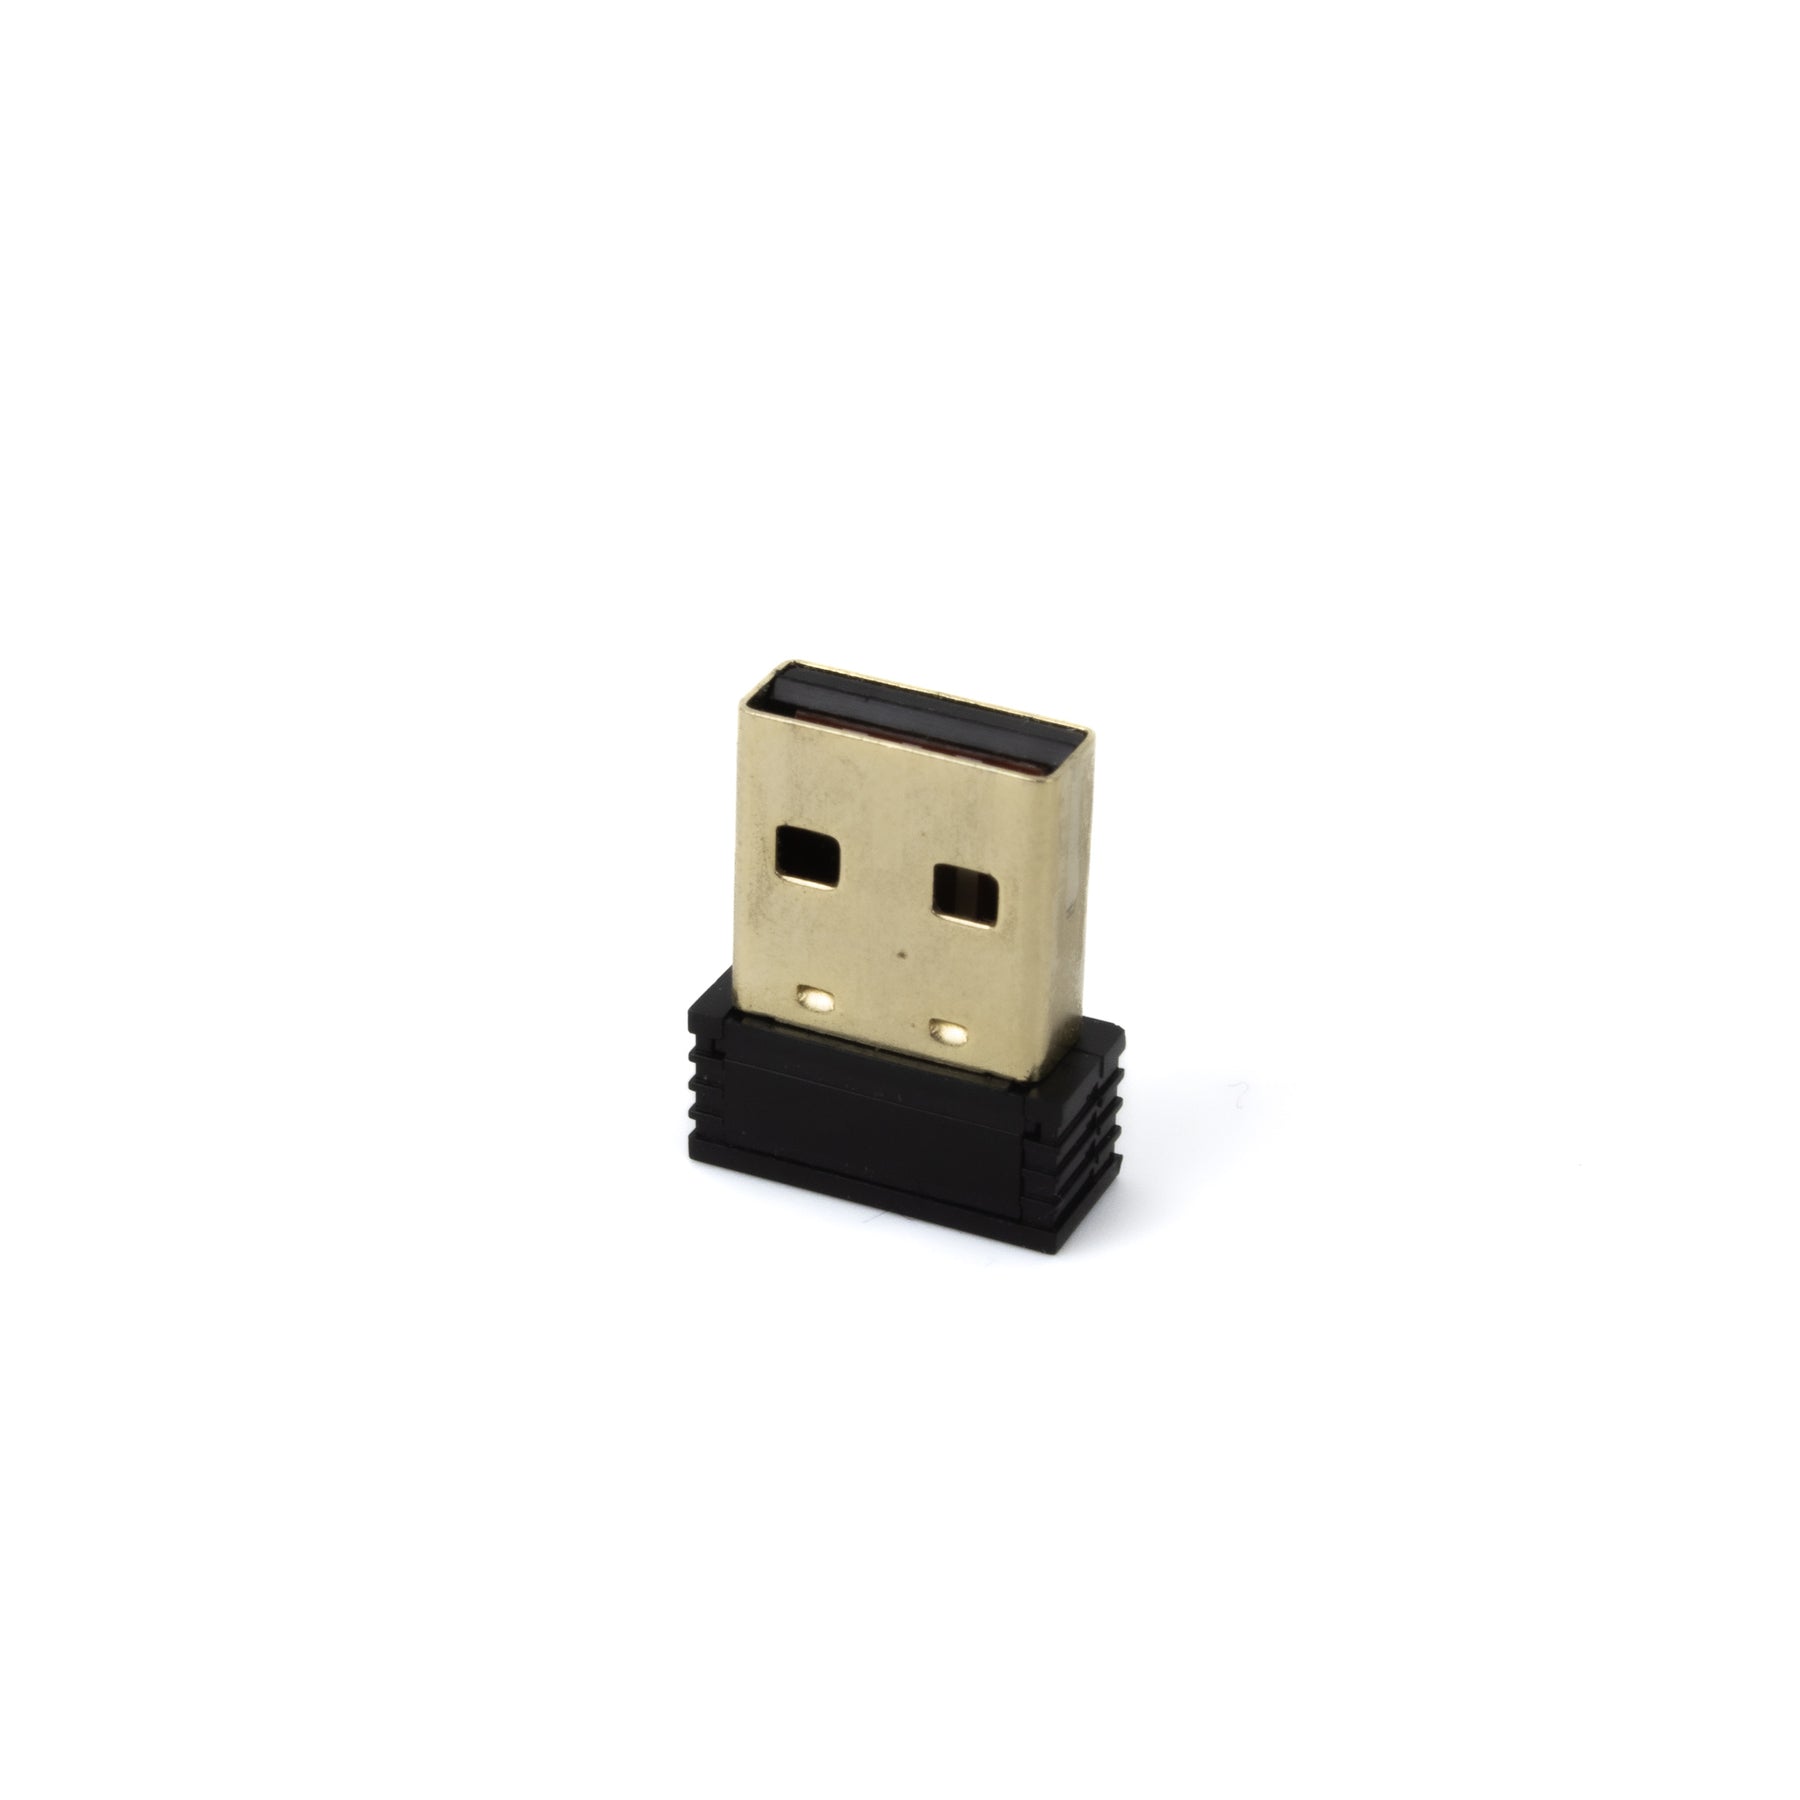 Mini USB receiver